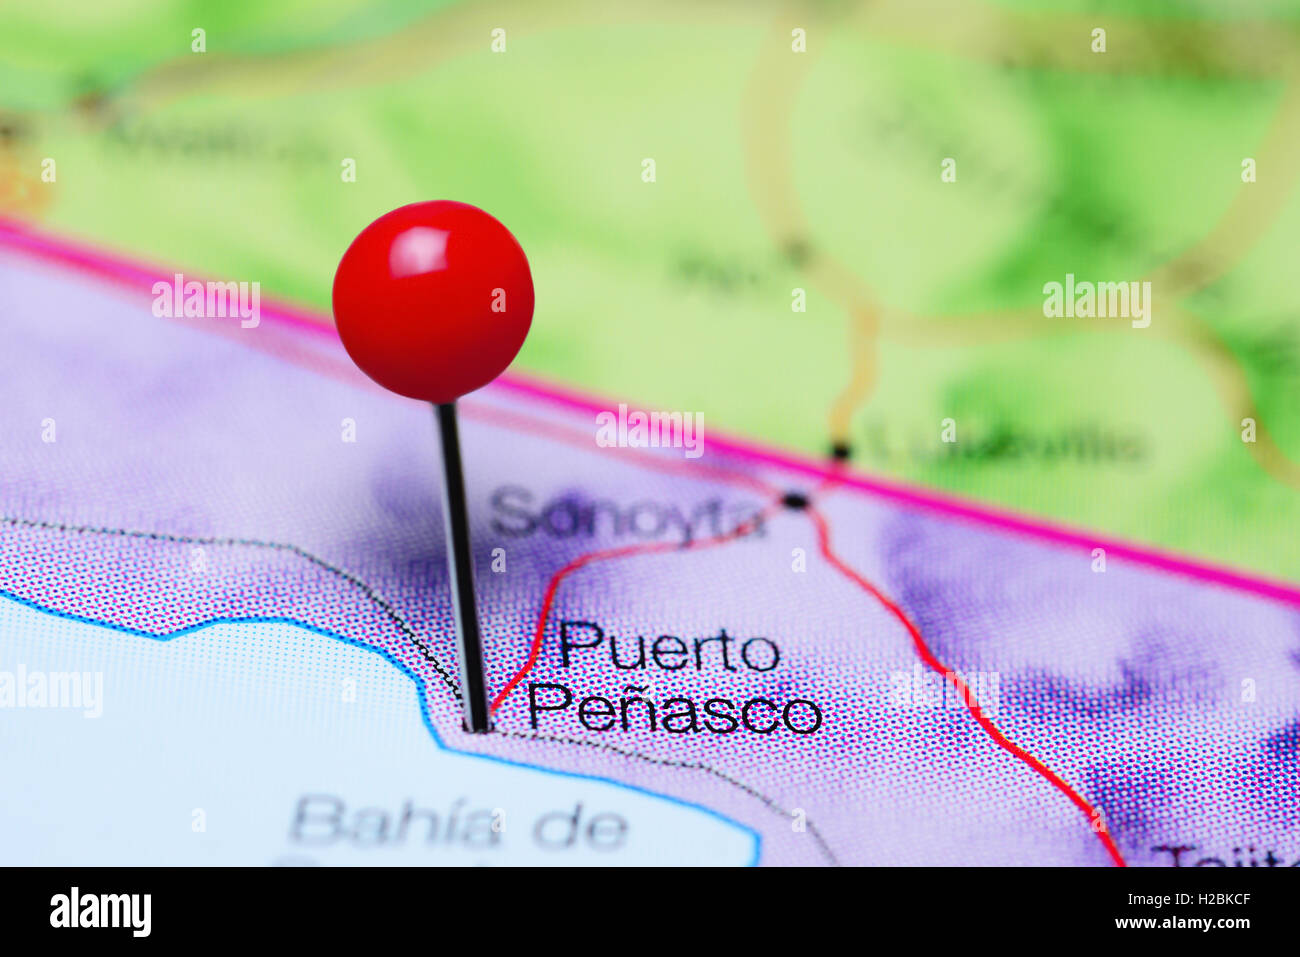 Puerto Penasco pinned on a map of Mexico Stock Photo